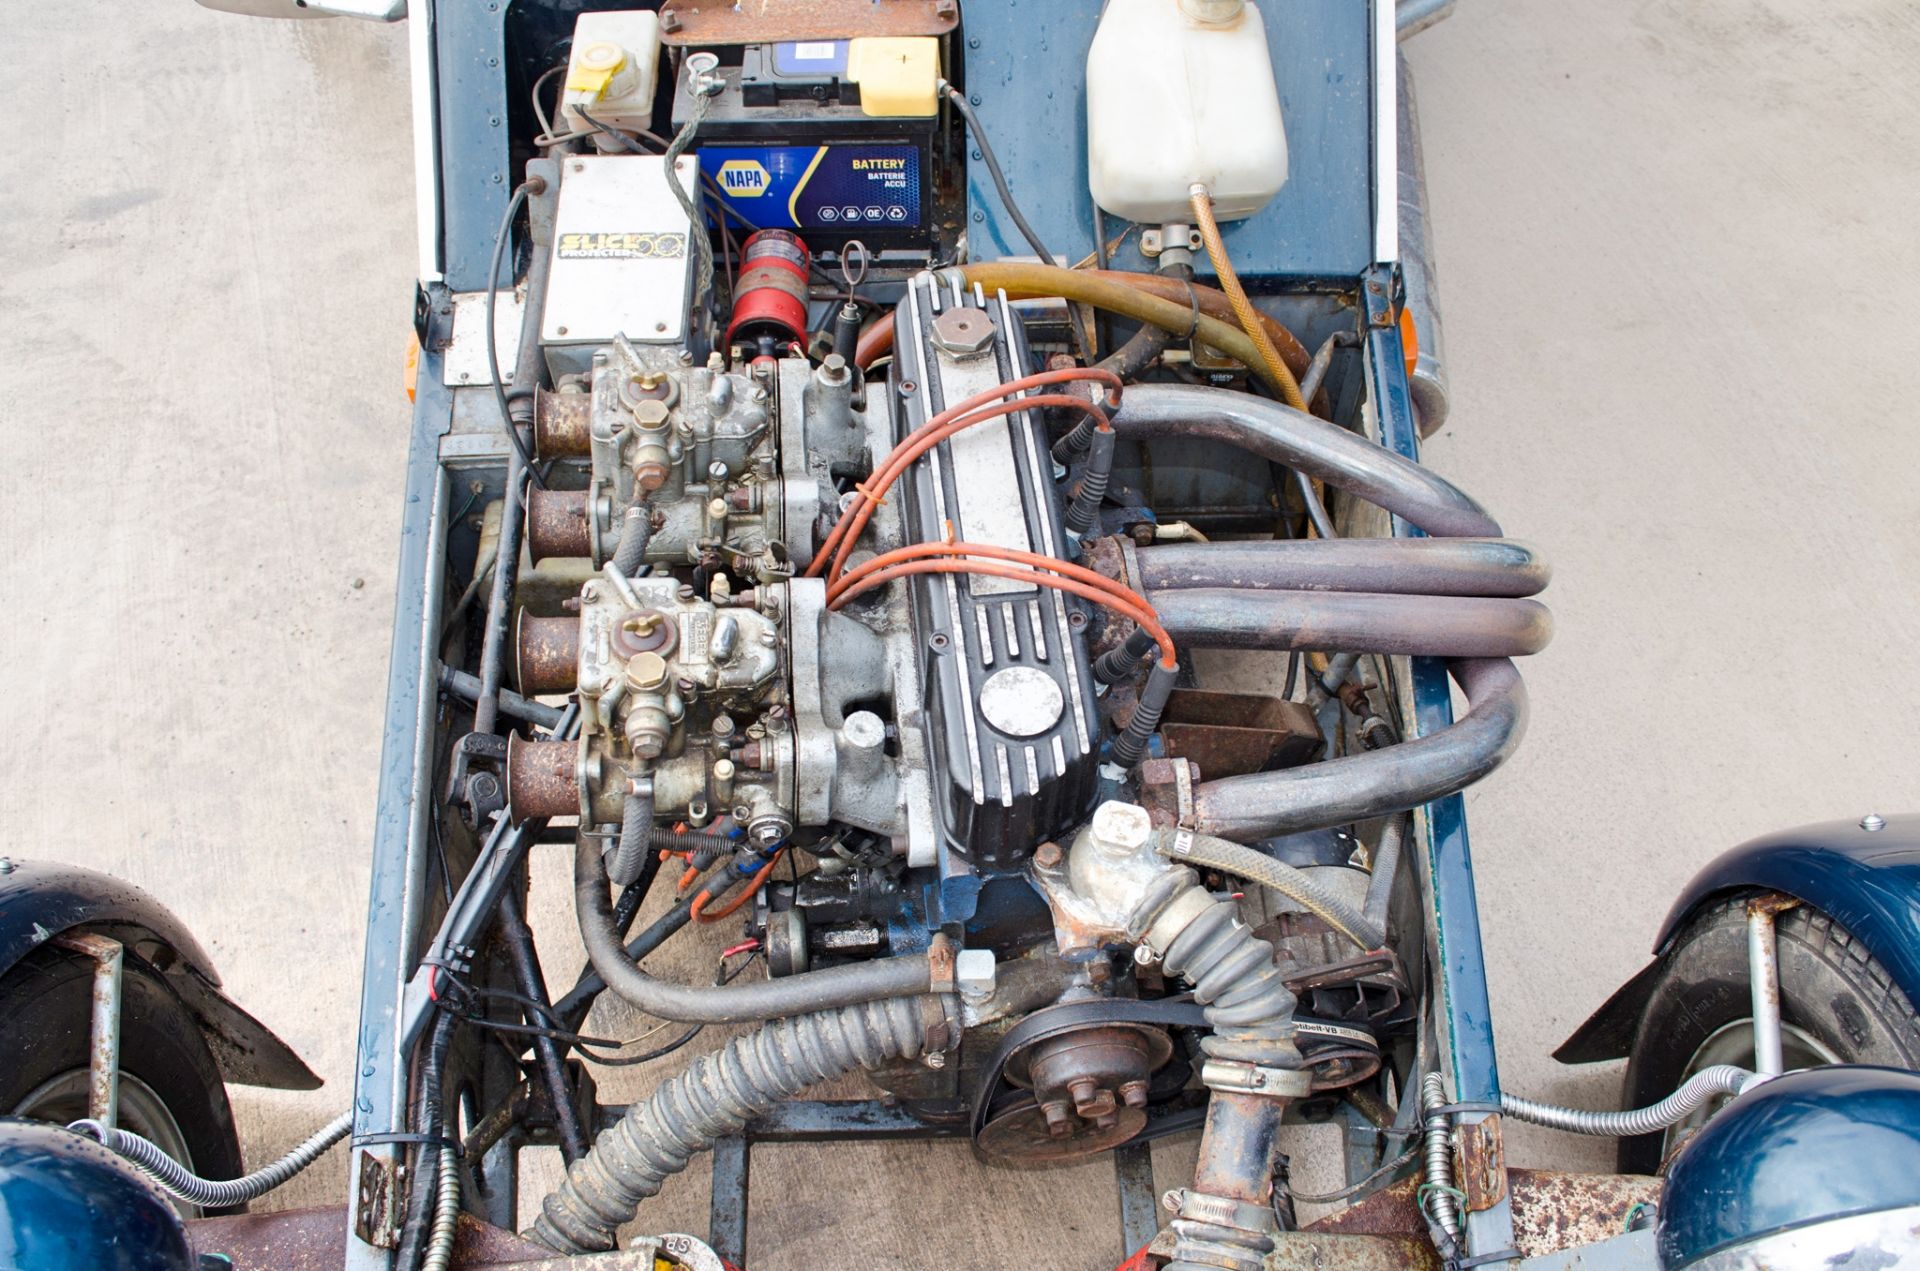 1993 Sylva Striker 1600cc 2 door kit car - Image 34 of 43